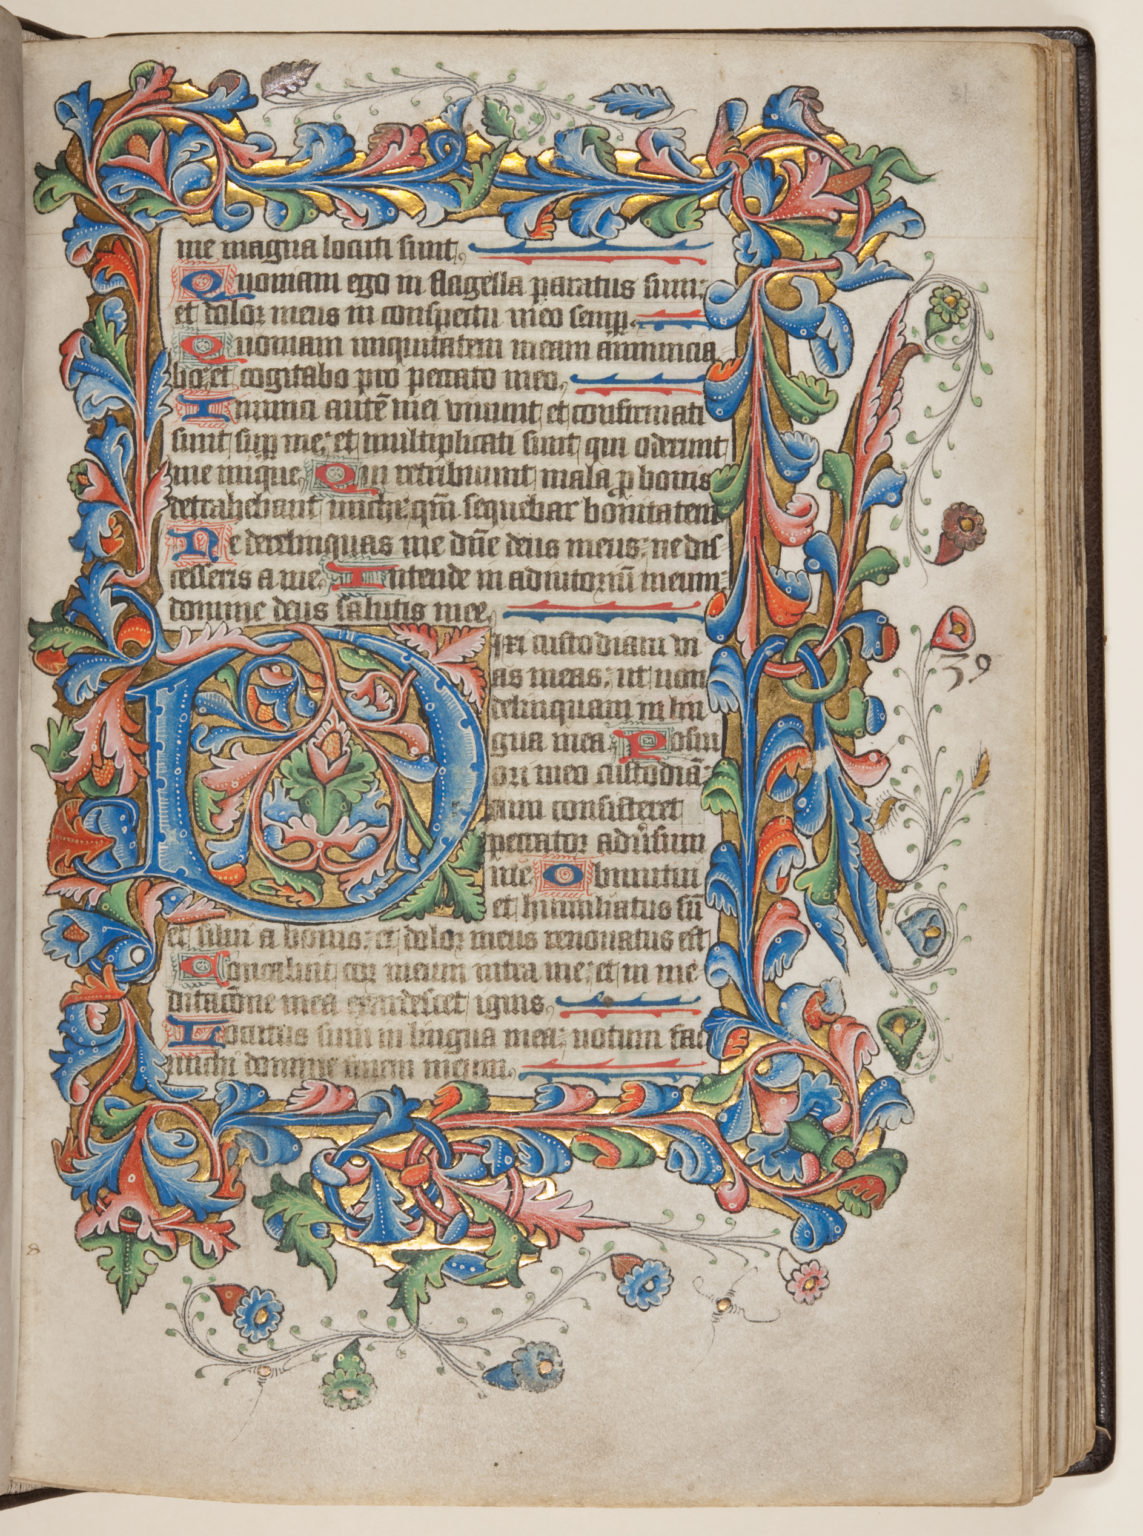 Medieval manuscripts go on display for Mediaeval Weekend! – Special